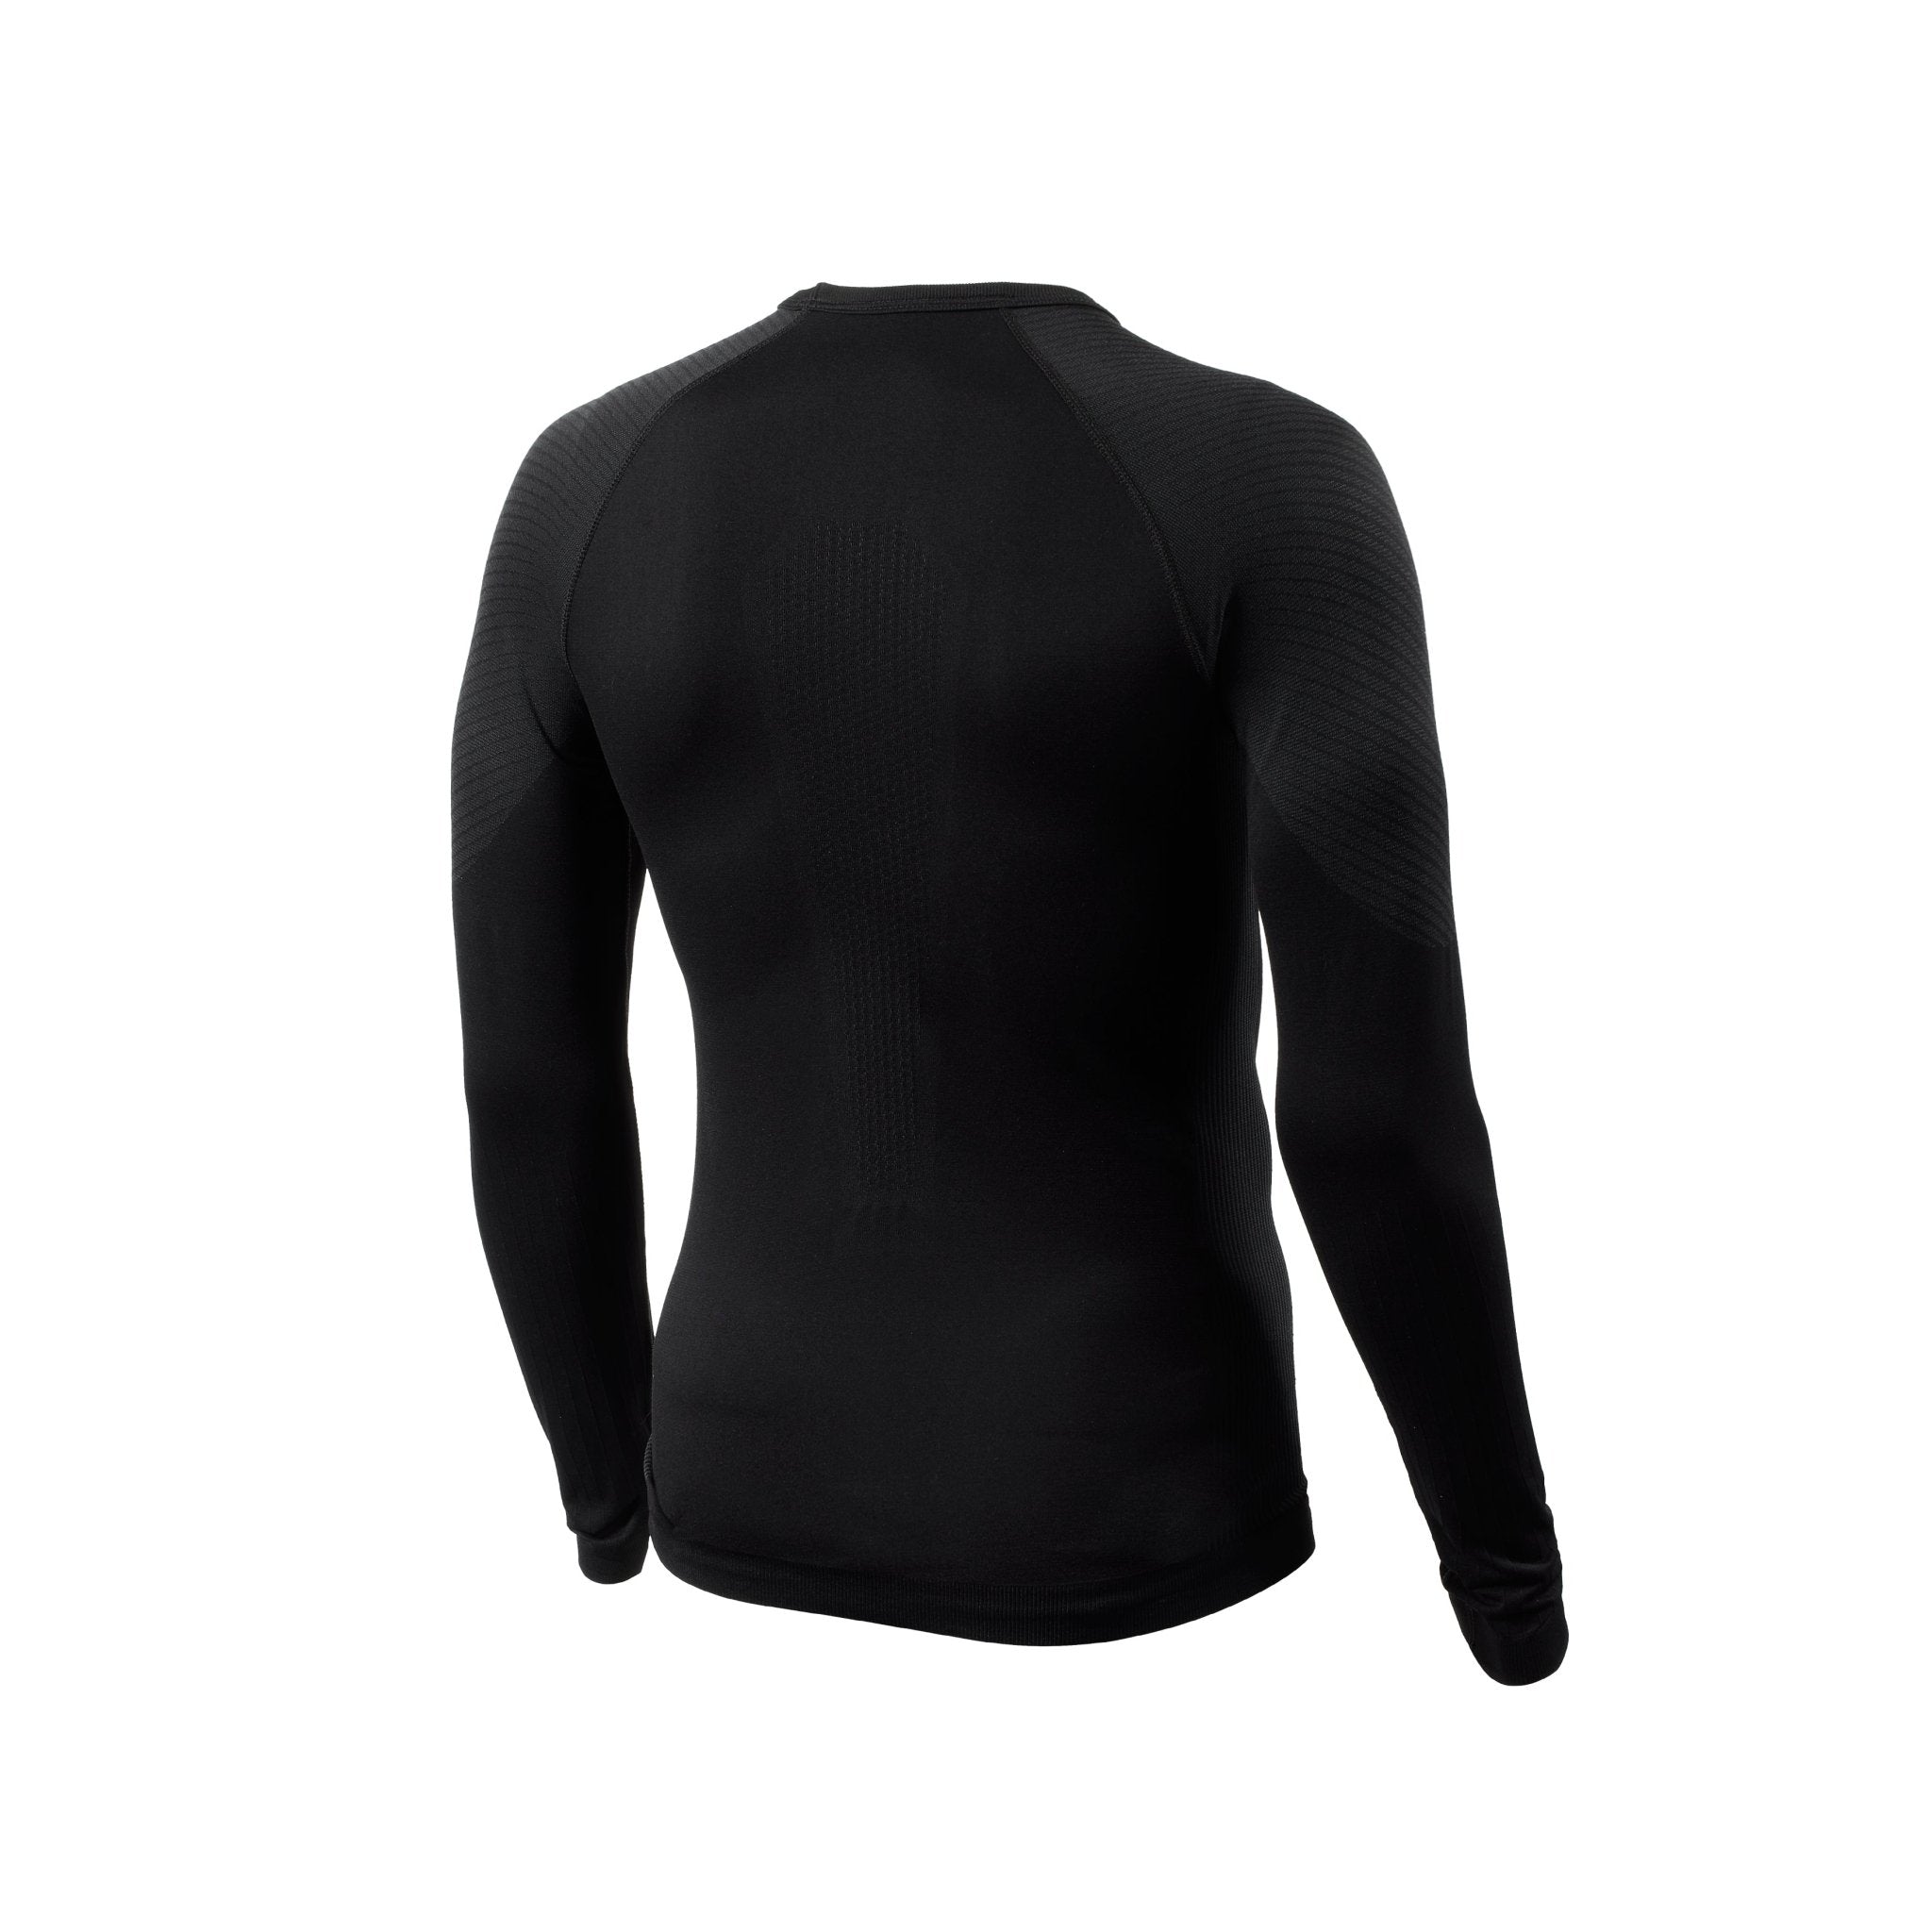 REV'IT! | Airborne 2 Shirt - Black - Thermalwear - Peak Moto